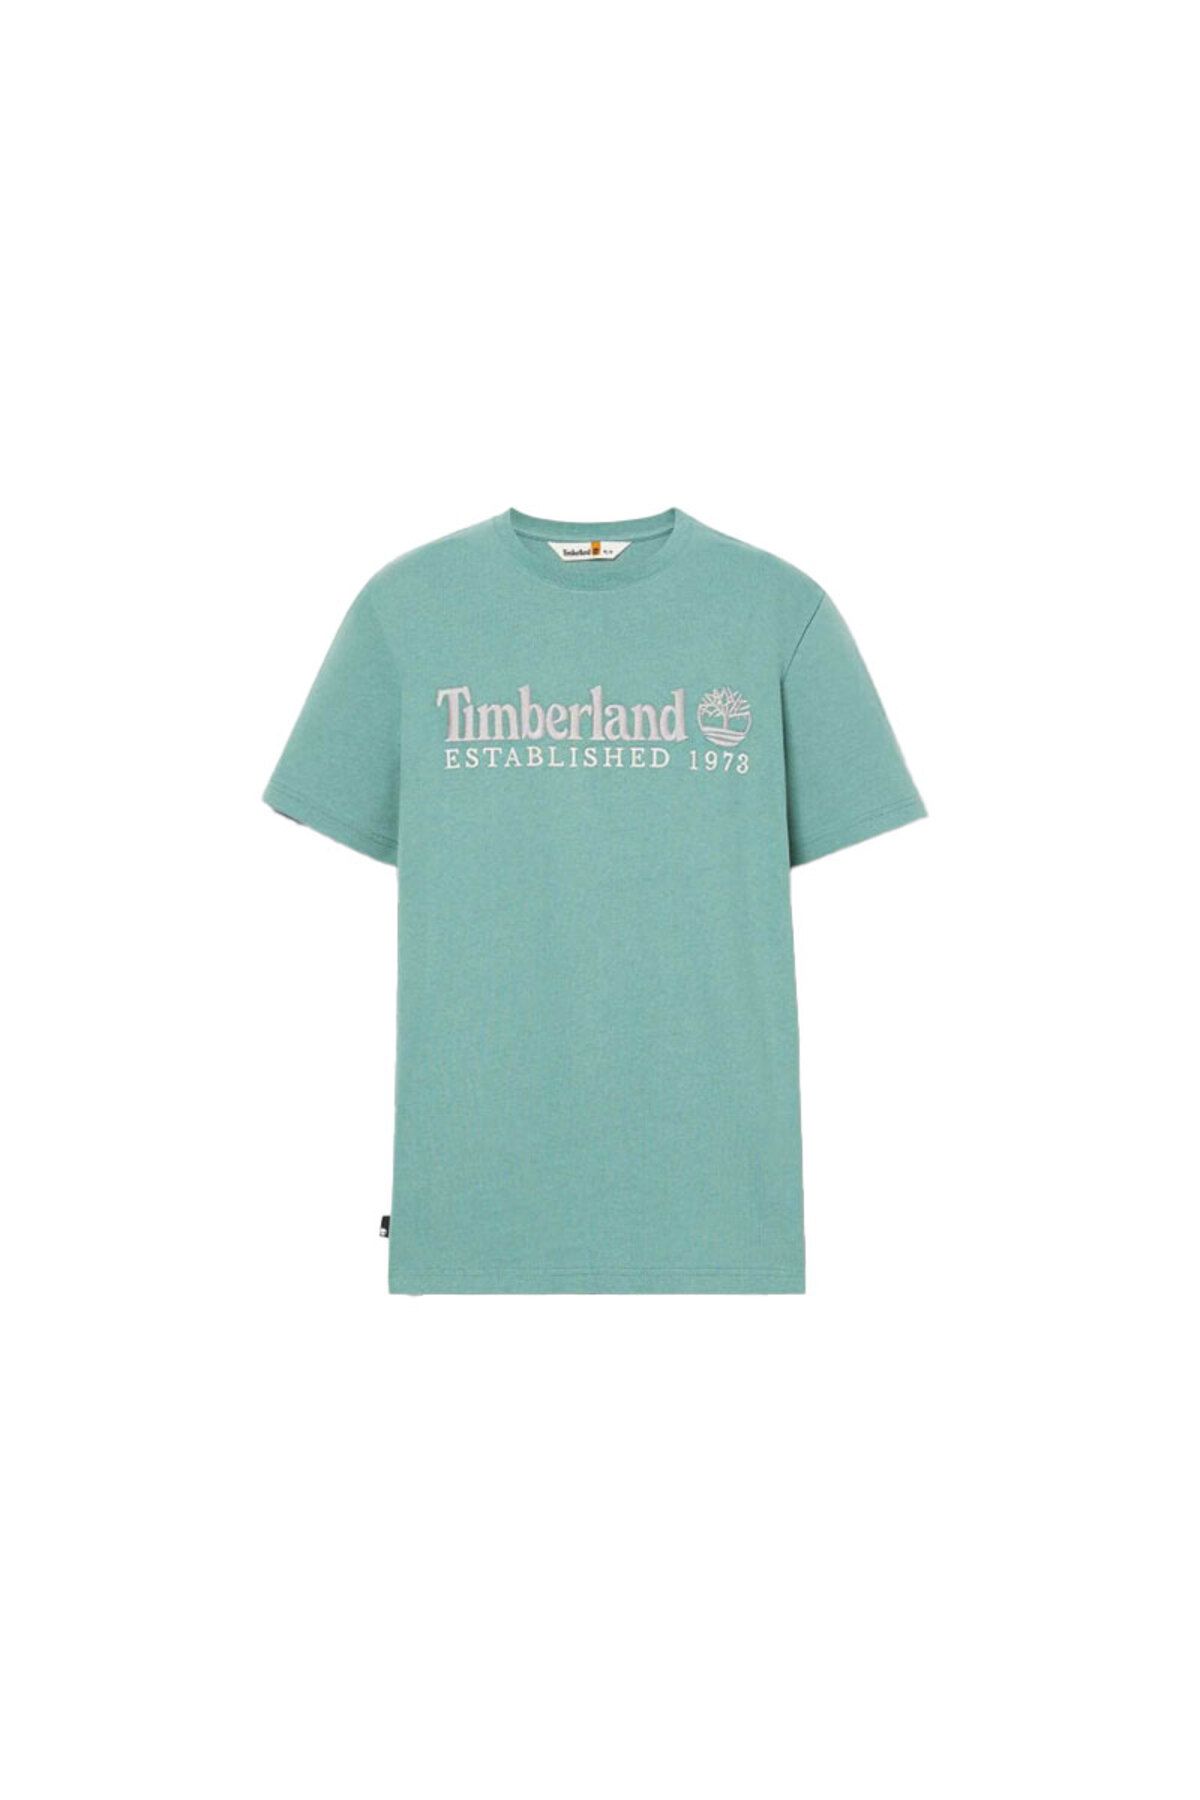 Timberland Embroidery Logo